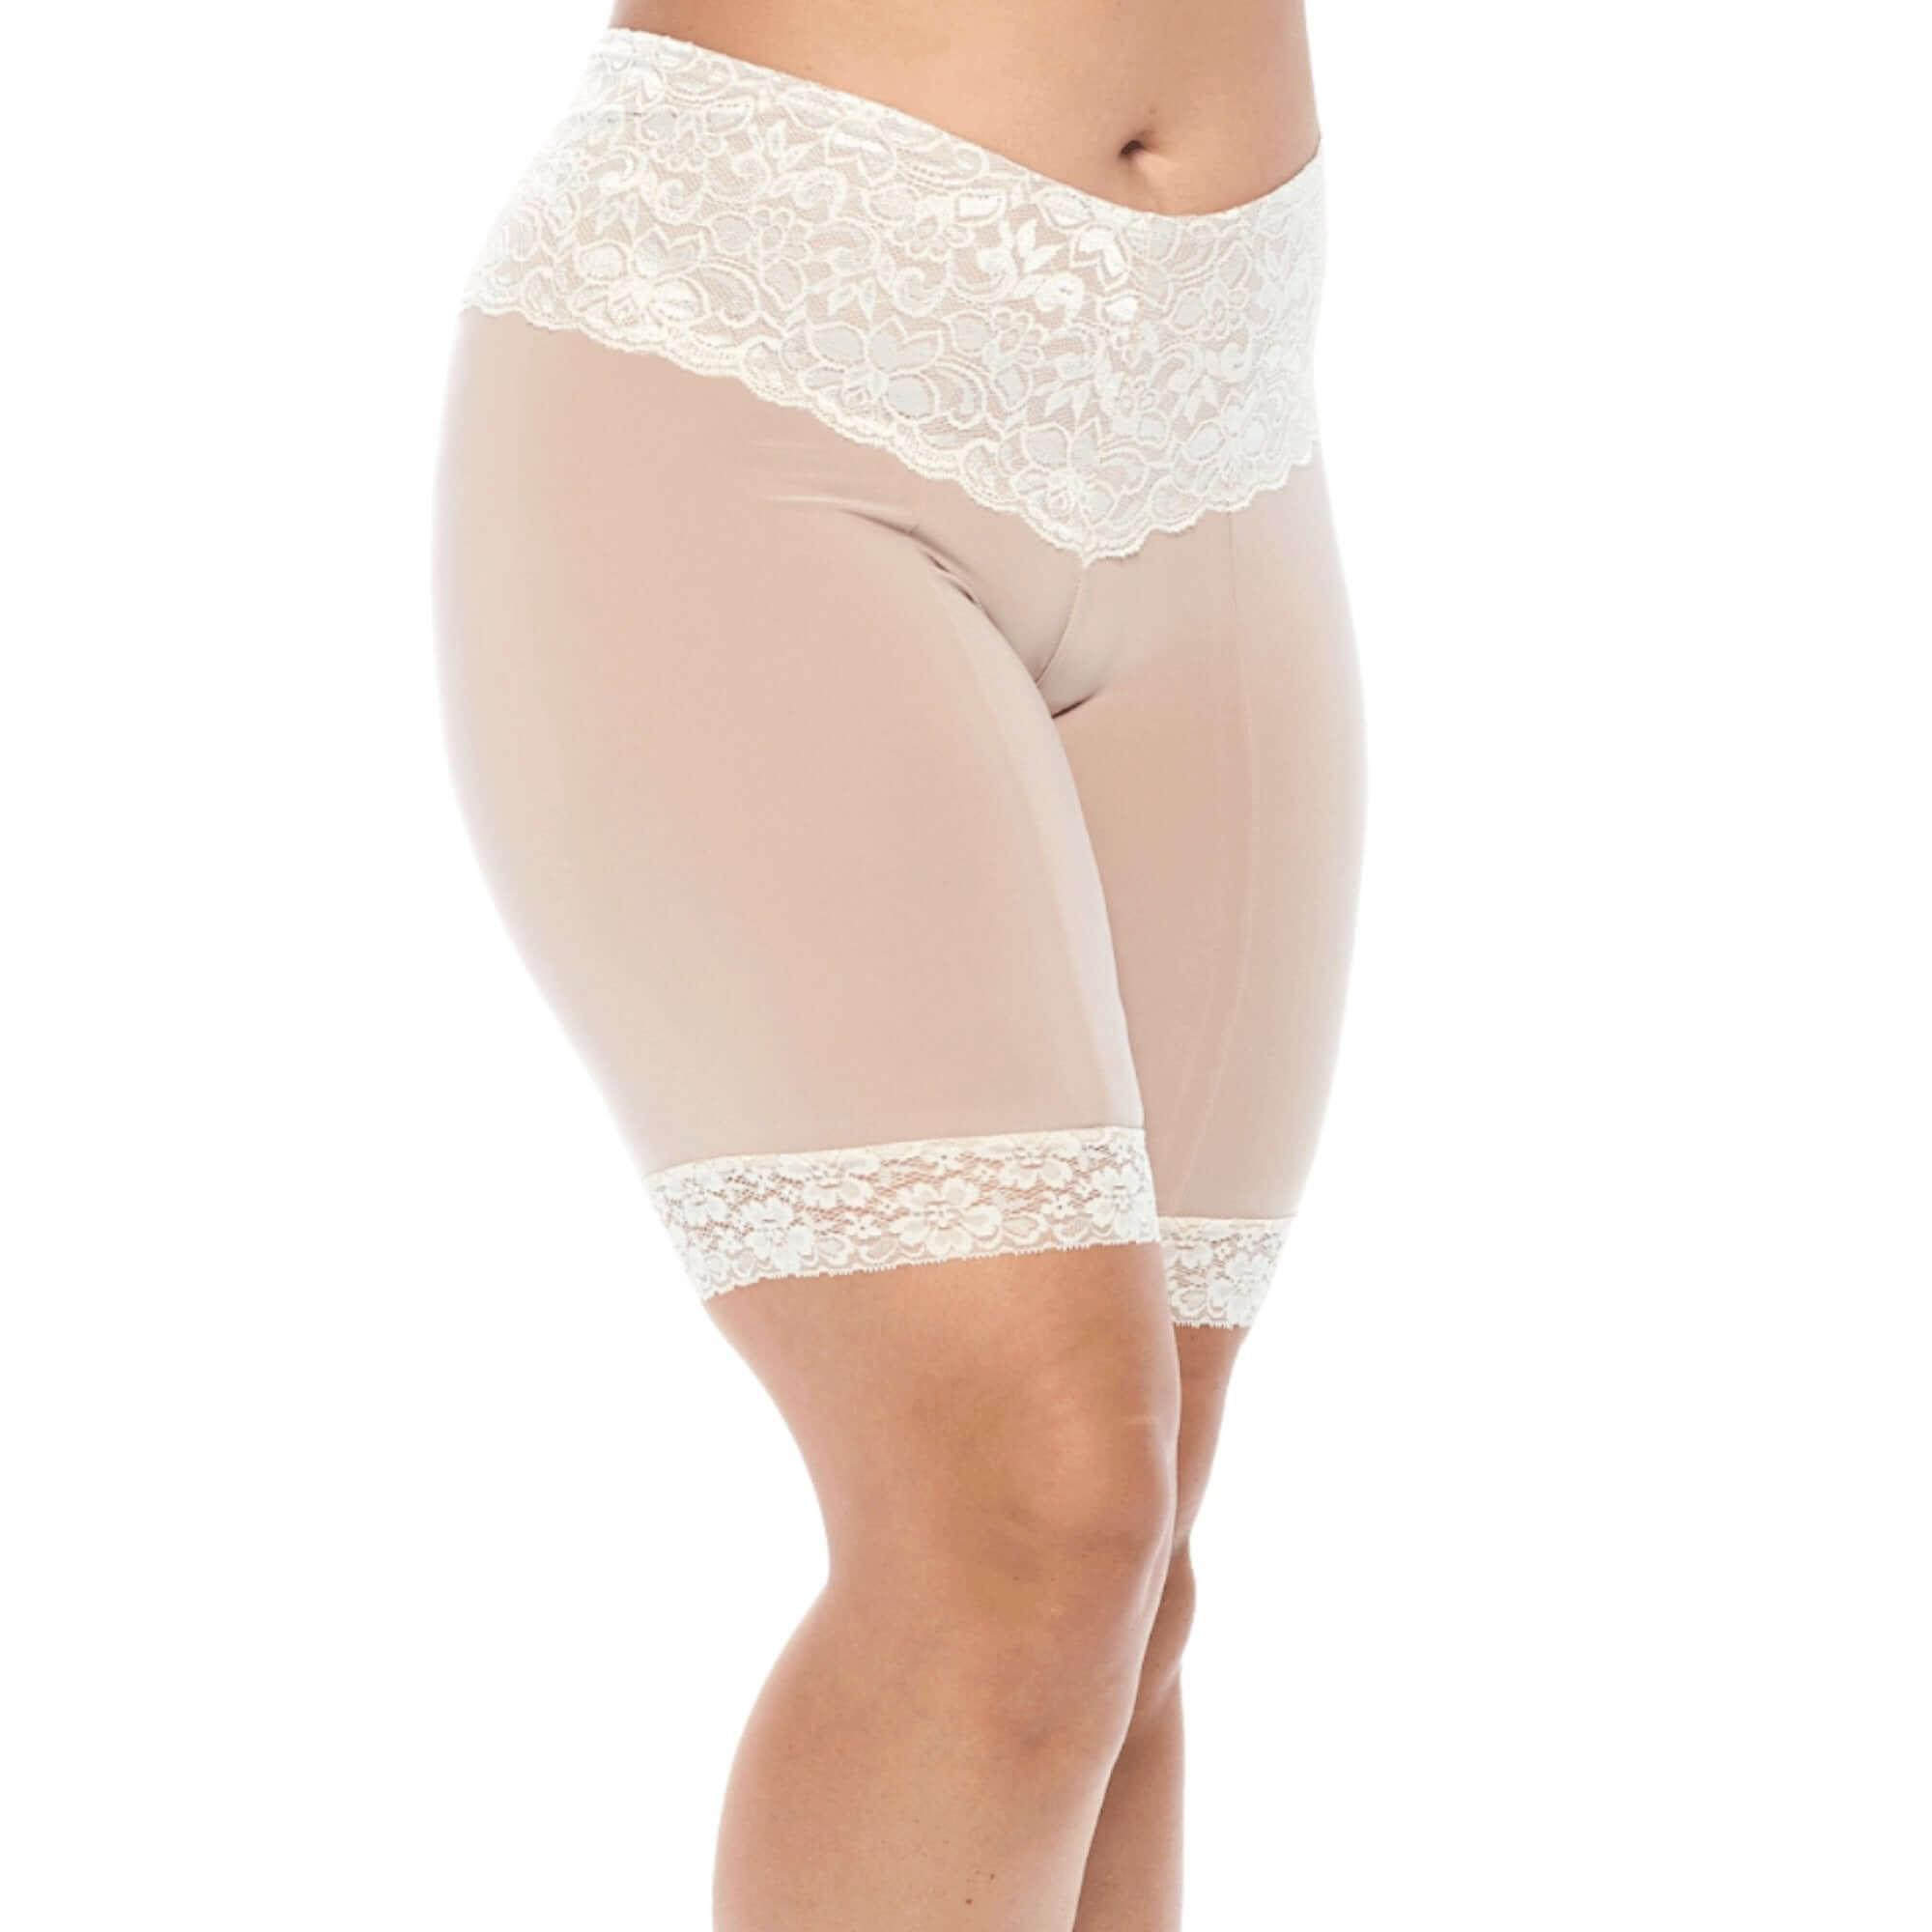 Slip Shorts for Women Under Dresses Seamless Smooth Anti-chafing Boyshorts Underwear  Lace Thigh Panties Safety Shorts, #2 Black+beige+white, S price in UAE,  UAE